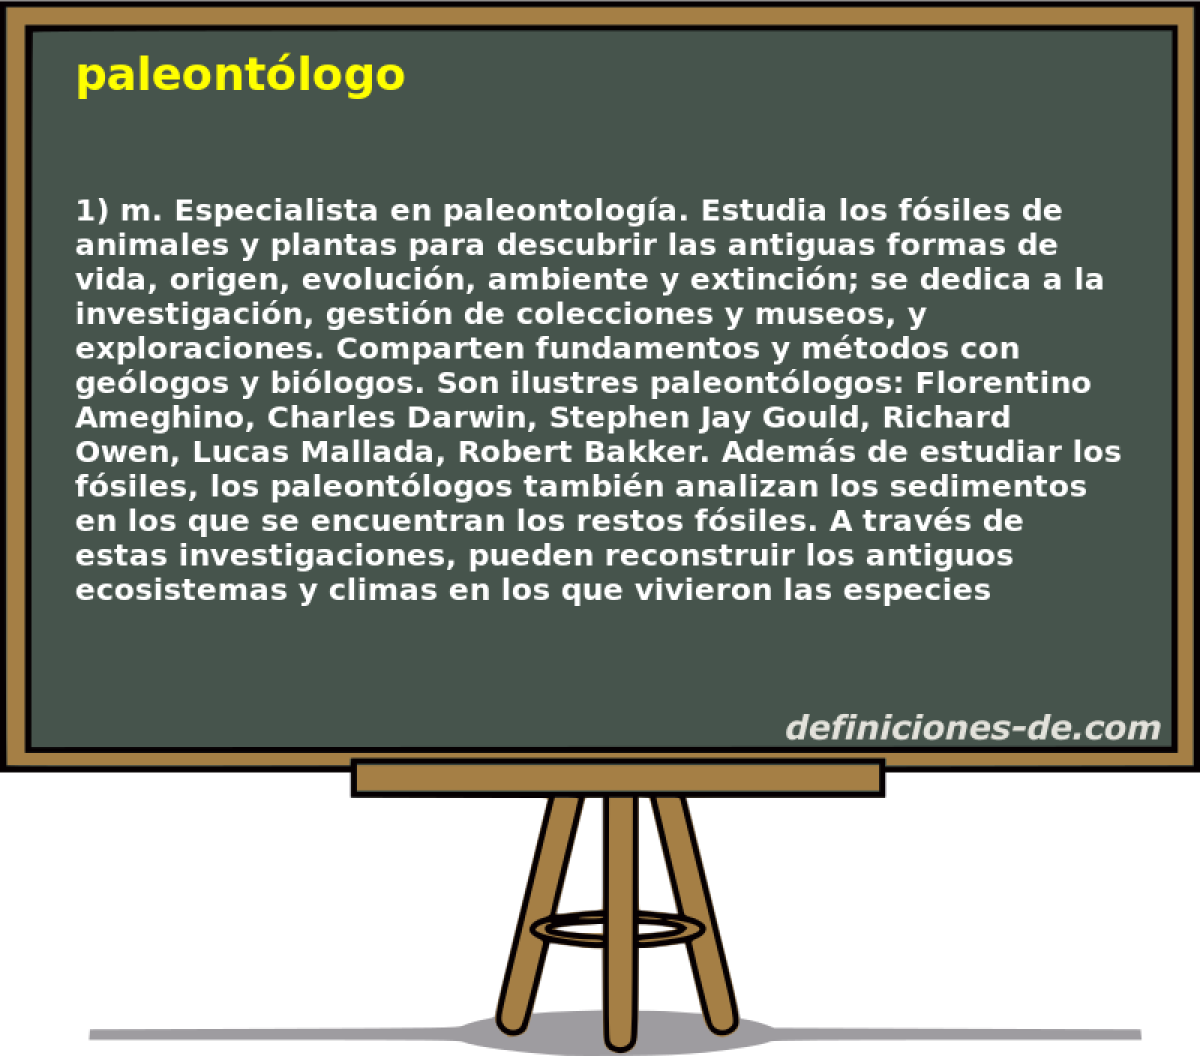 paleontlogo 